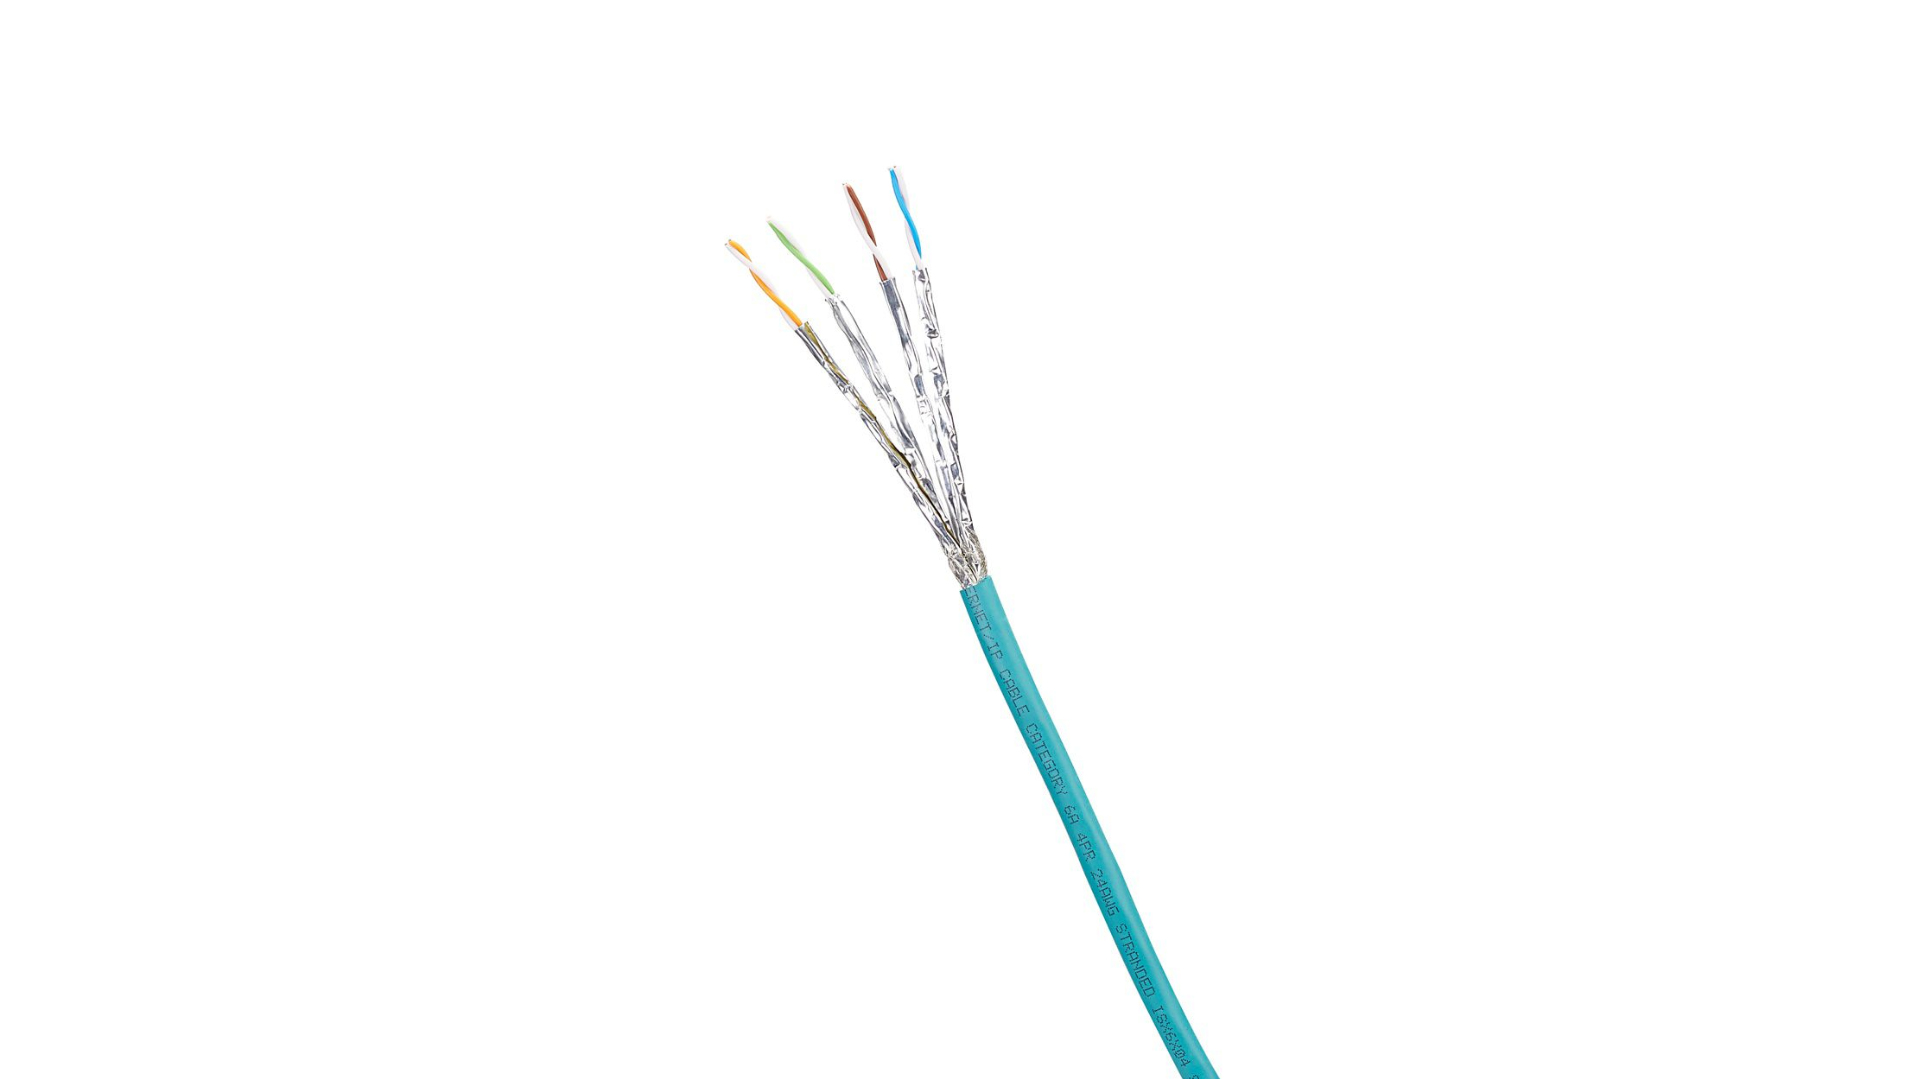 PANDUIT  Bobina de Cable Blindado S/FTP Categoría 6A, Uso Industrial con Resistencia al Aceite, Rayos UV y Abrasión, Multifilar (Flexible), Color Azul Cerceta, Bobina de 500m